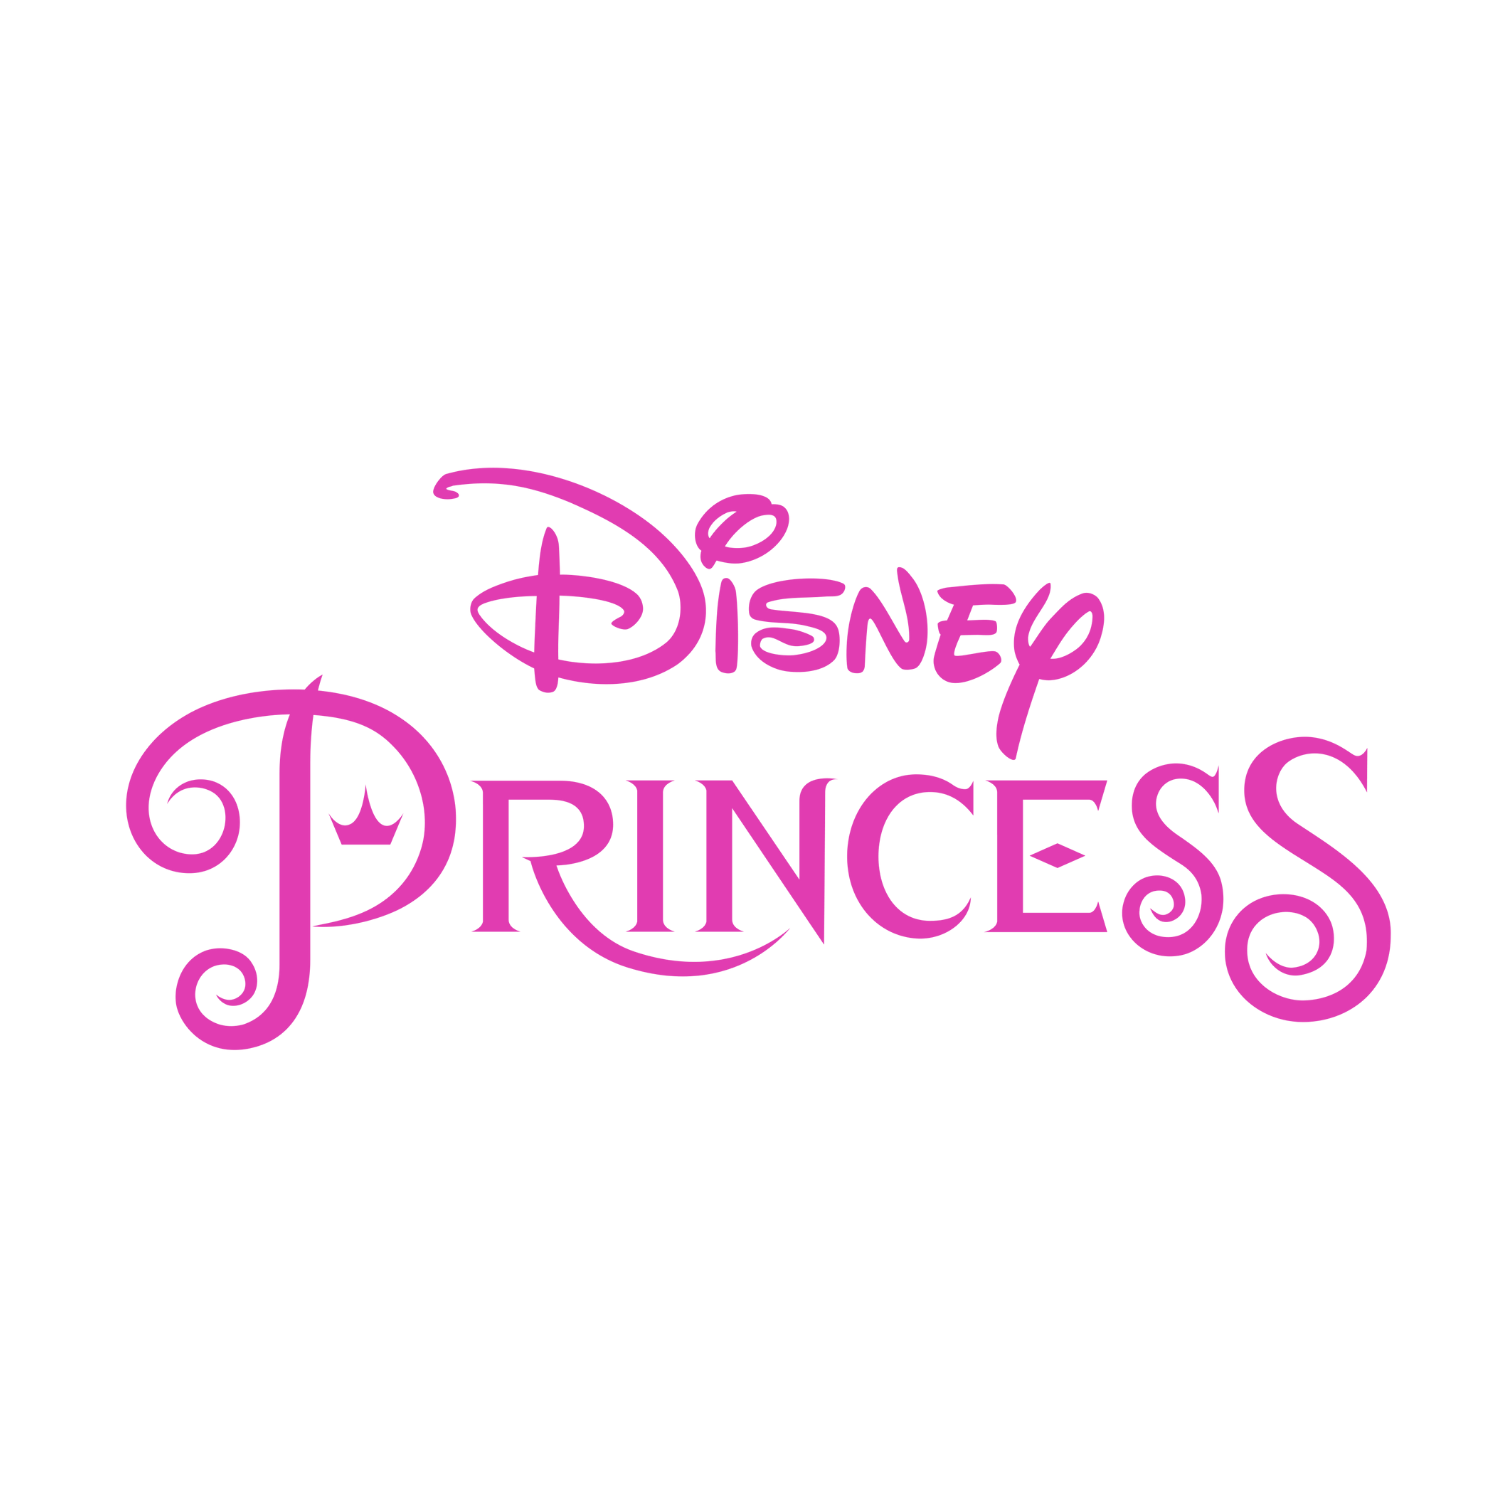 Shop Disney Princess products